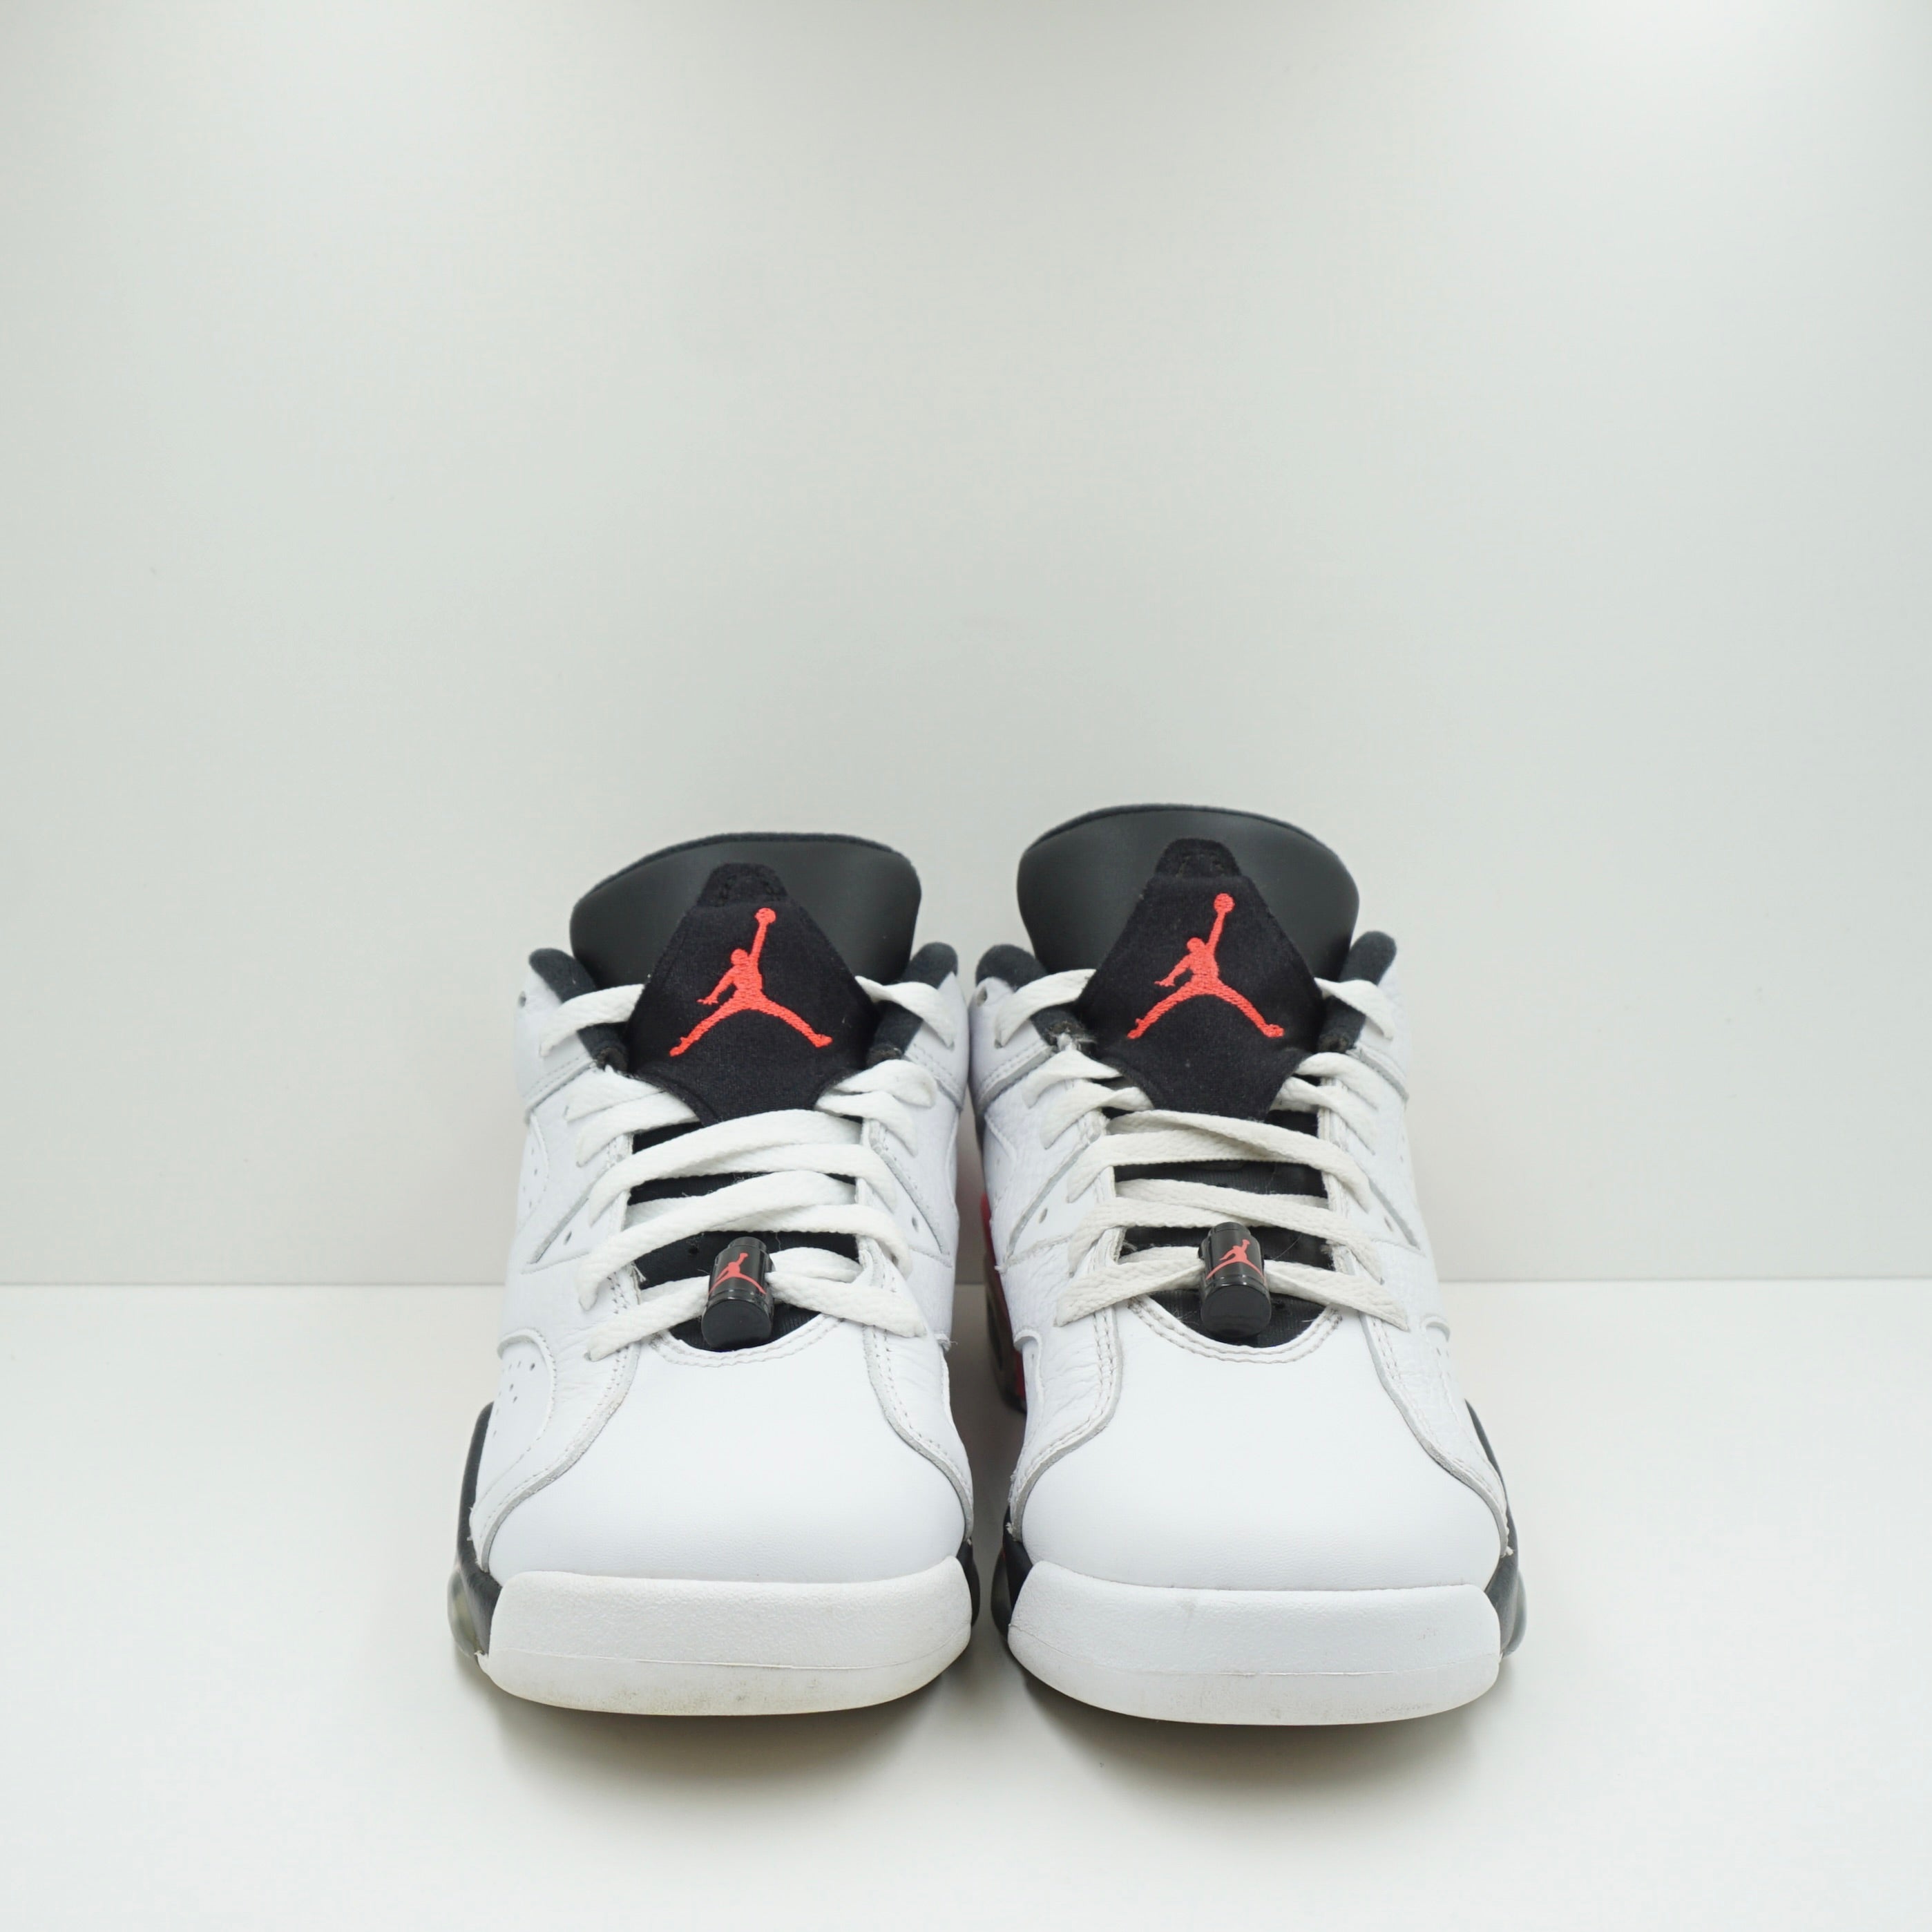 Jordan 6 Retro Low White Infrared 23 Black (GS)